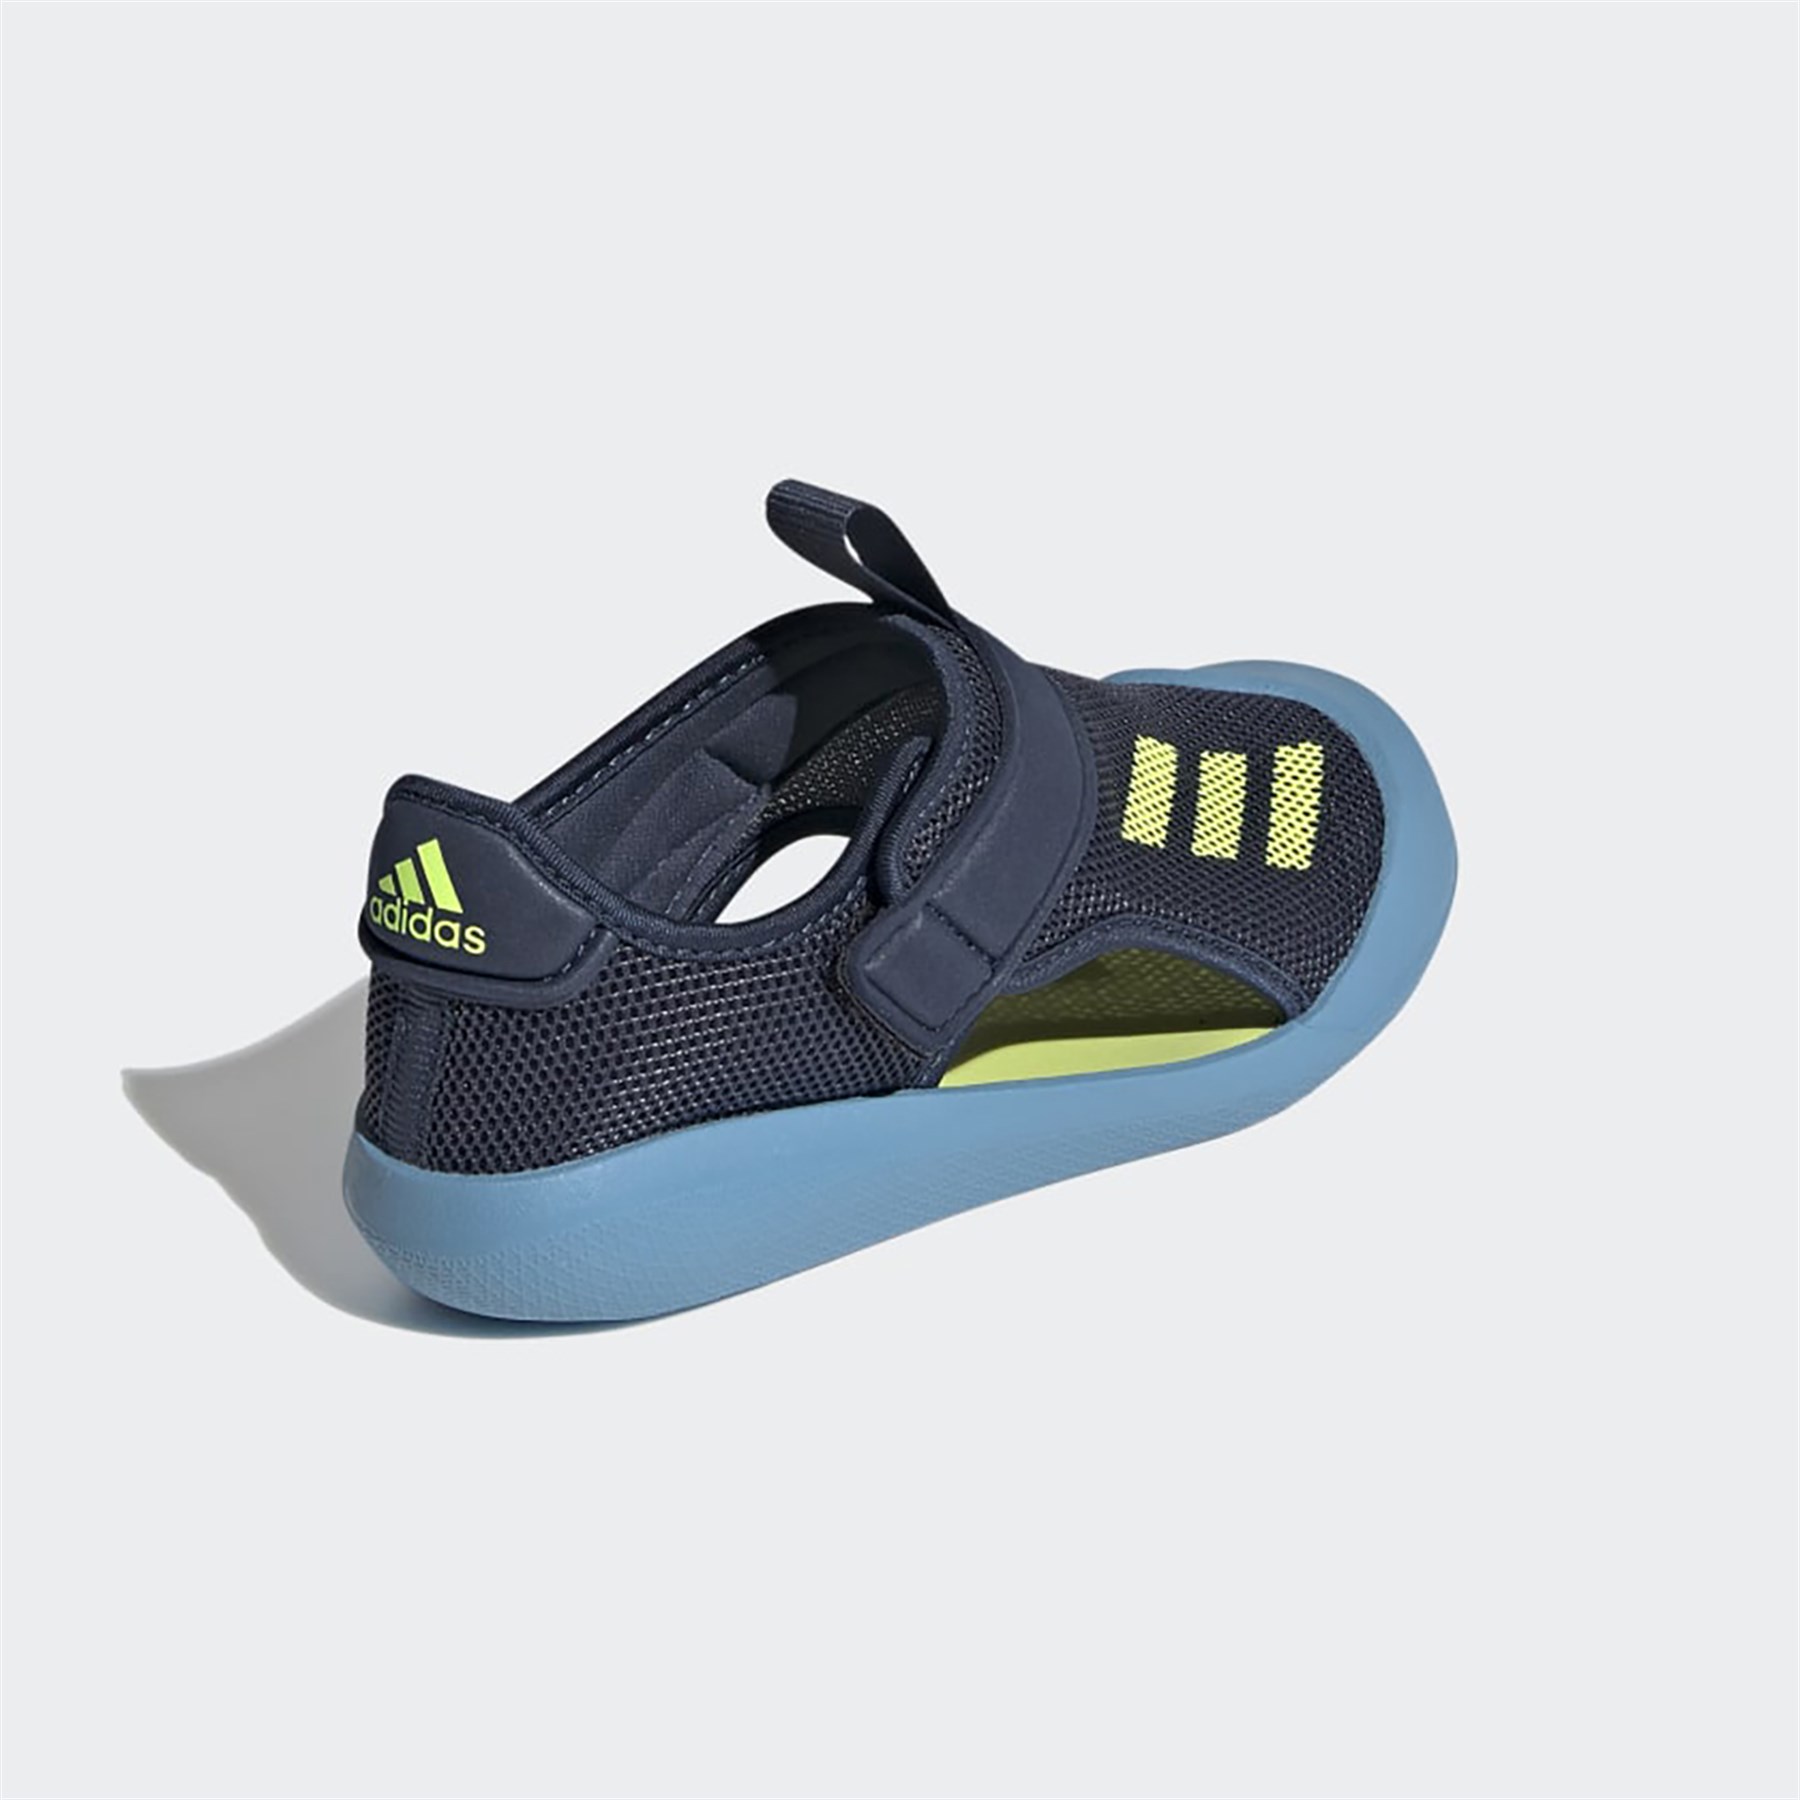 Adidas Erkek Çocuk Sandalet Altaventure Ct C Fy8928 ALTAVENTURE CT C